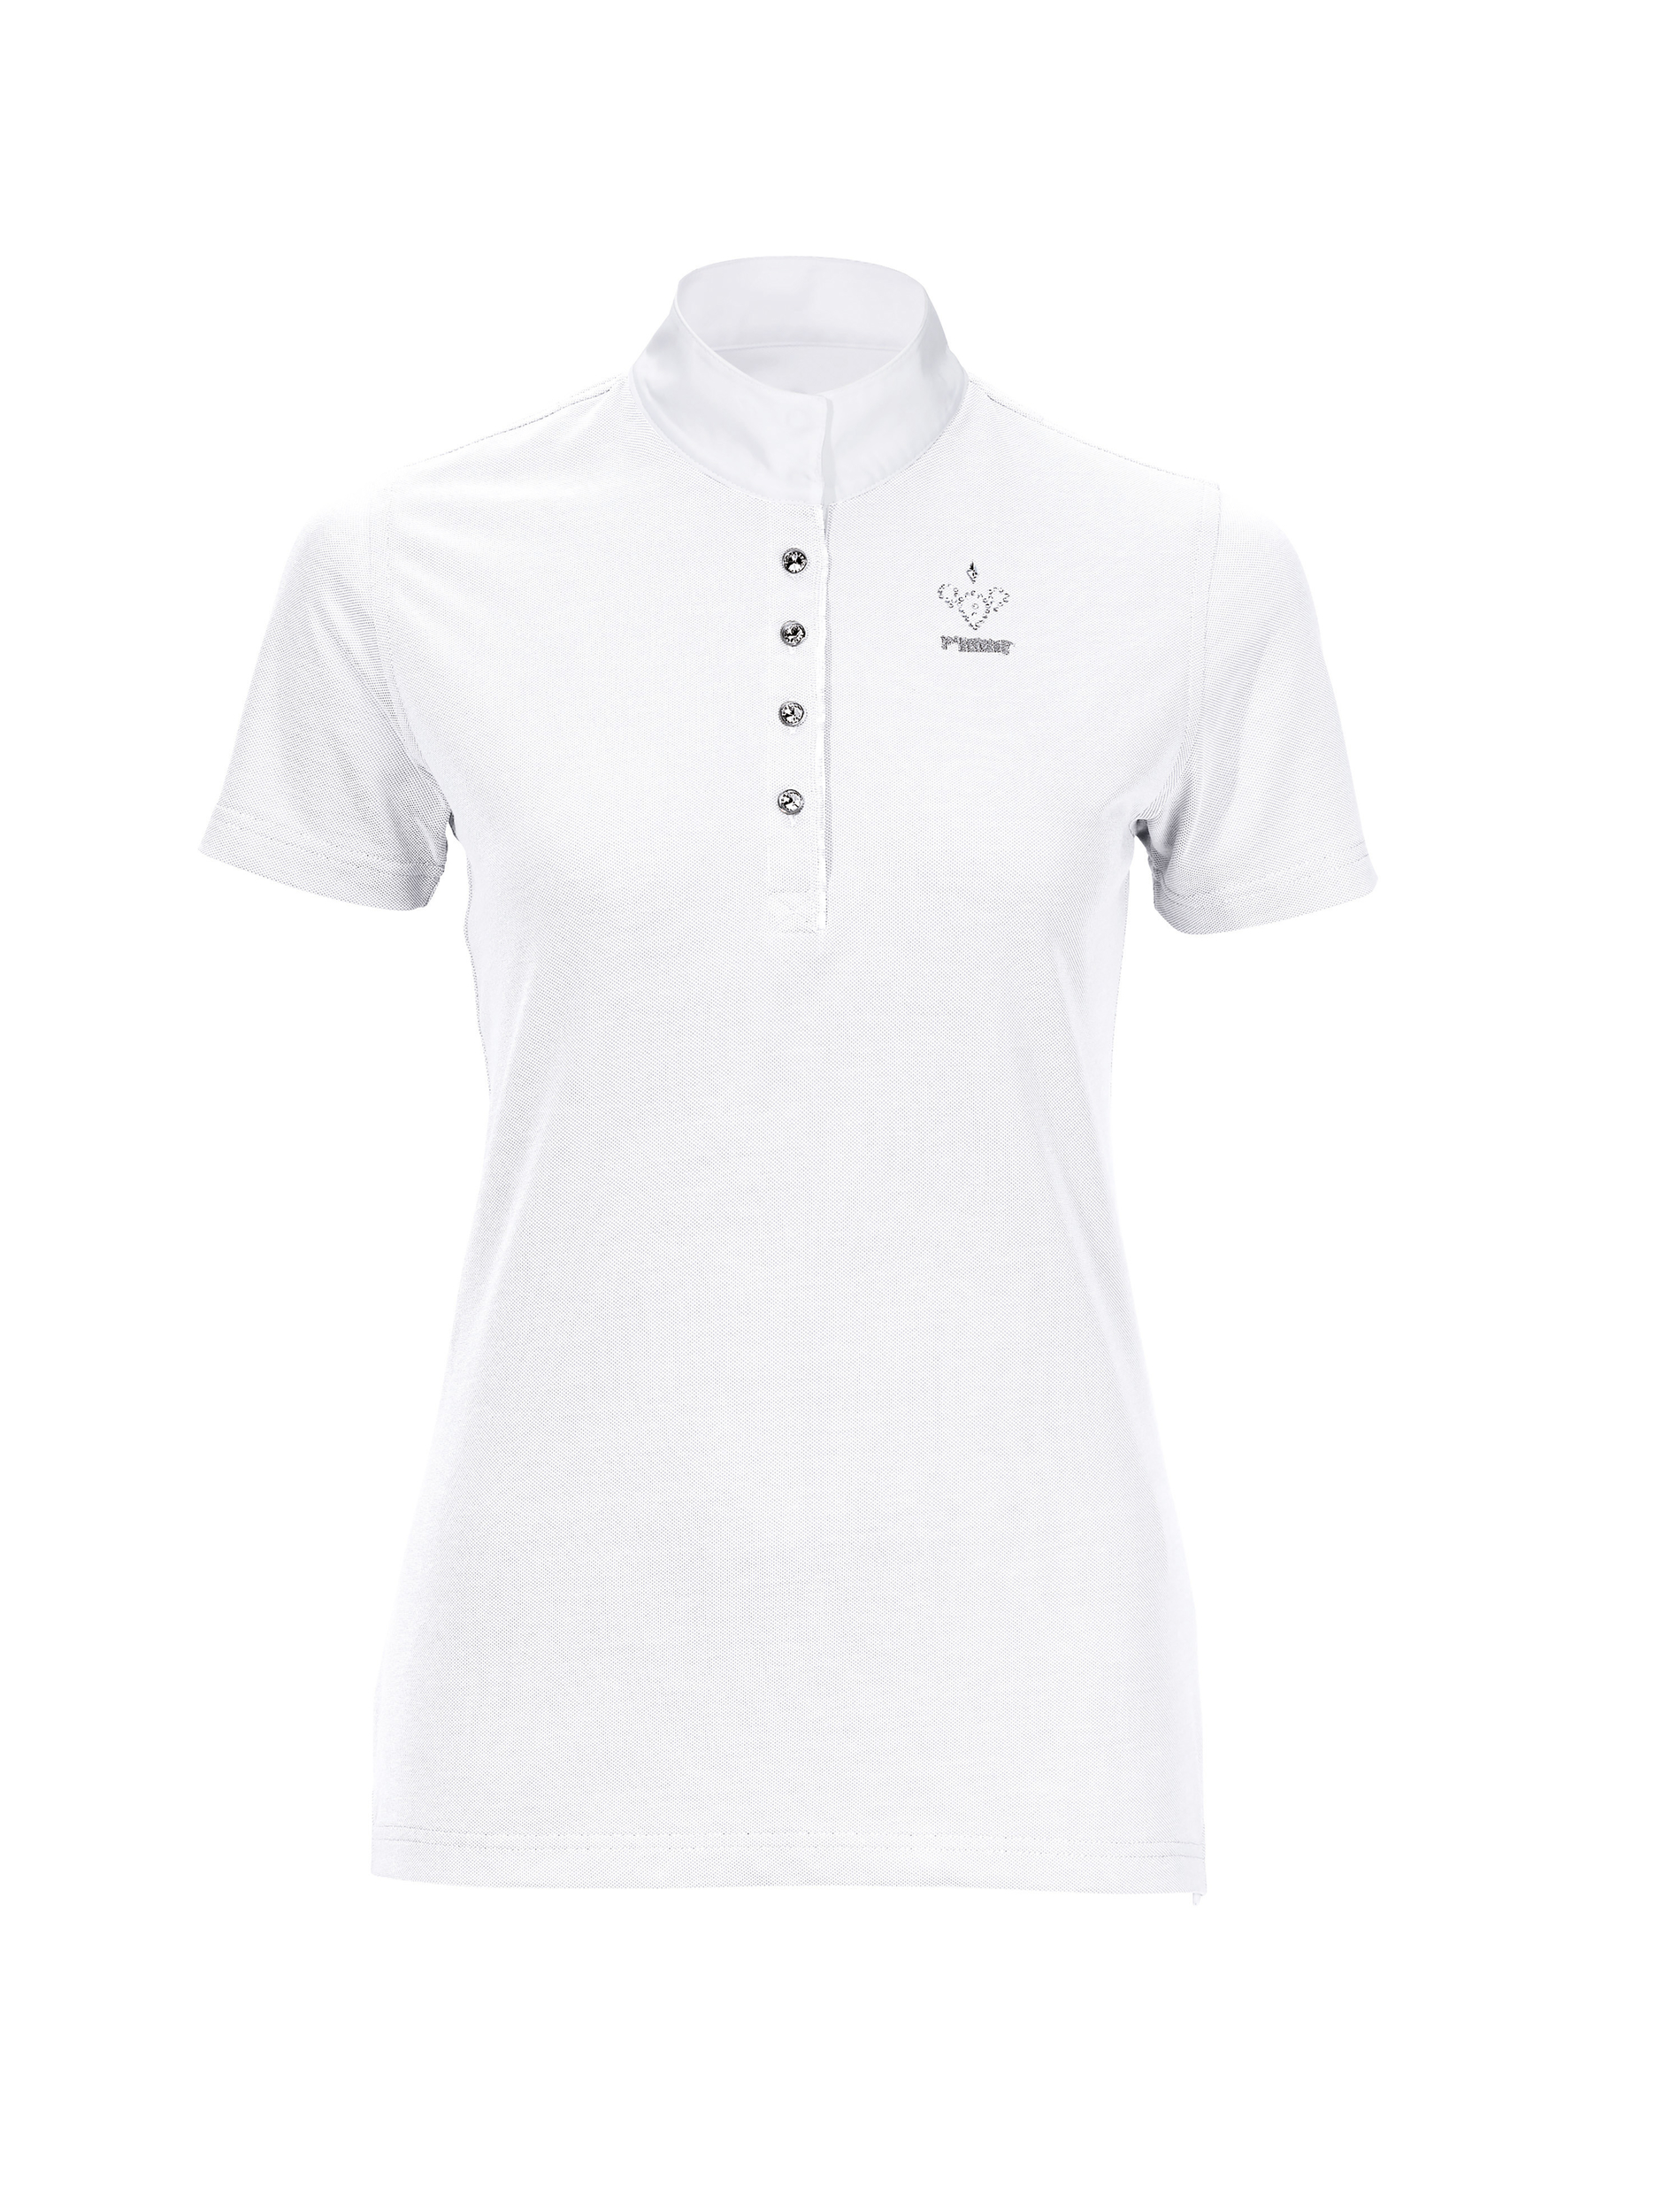 PIKEUR sportliches Damen kurzarm Turniershirt - white - 34